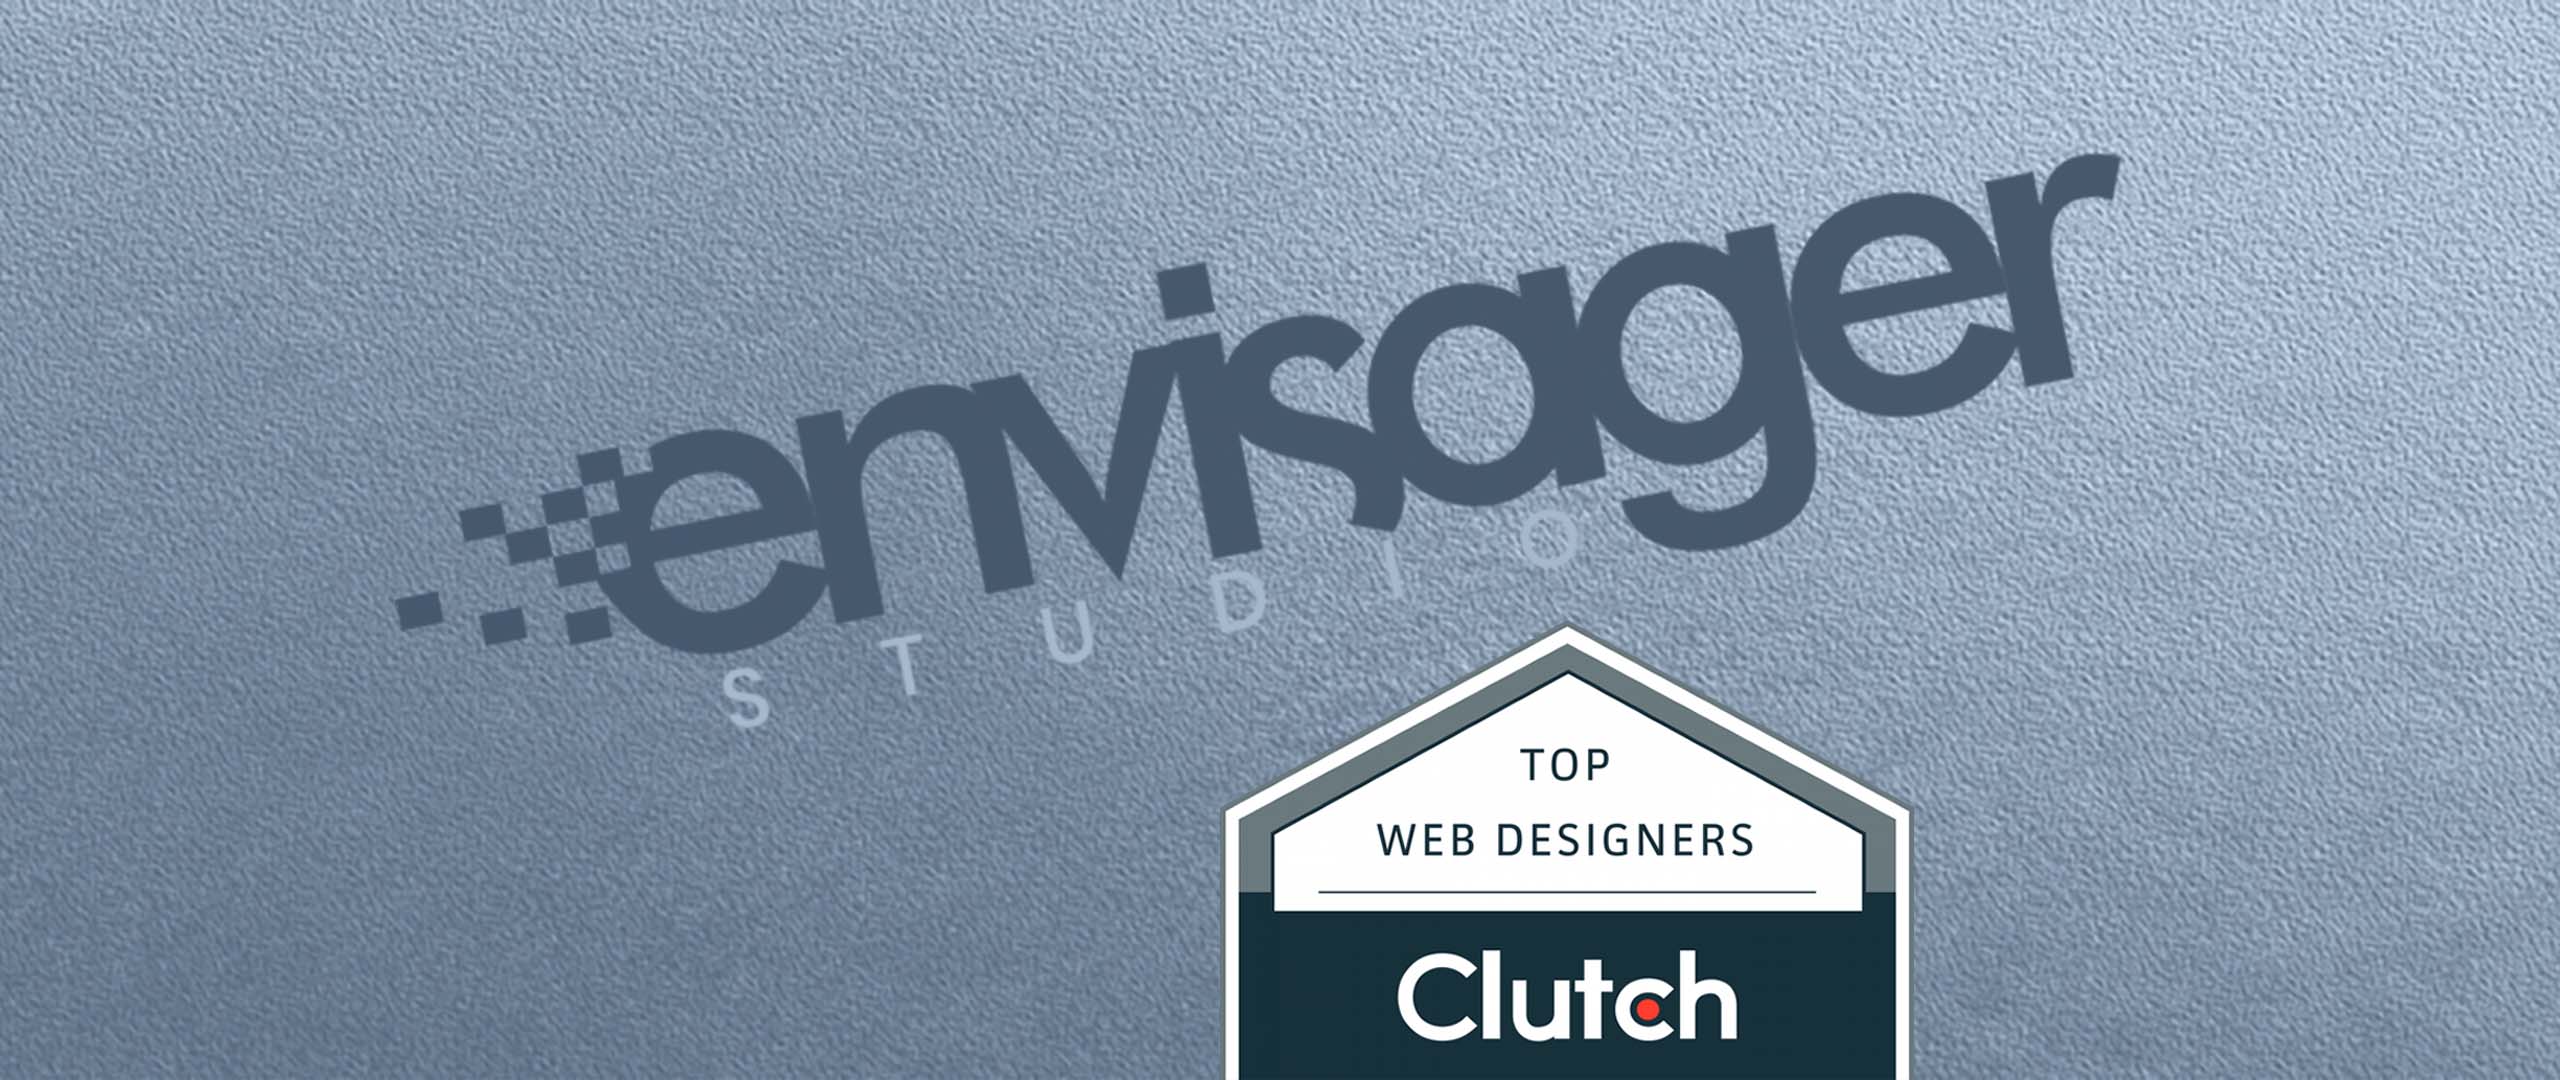 Envisager Studio Recognized for Superior Web Design Service